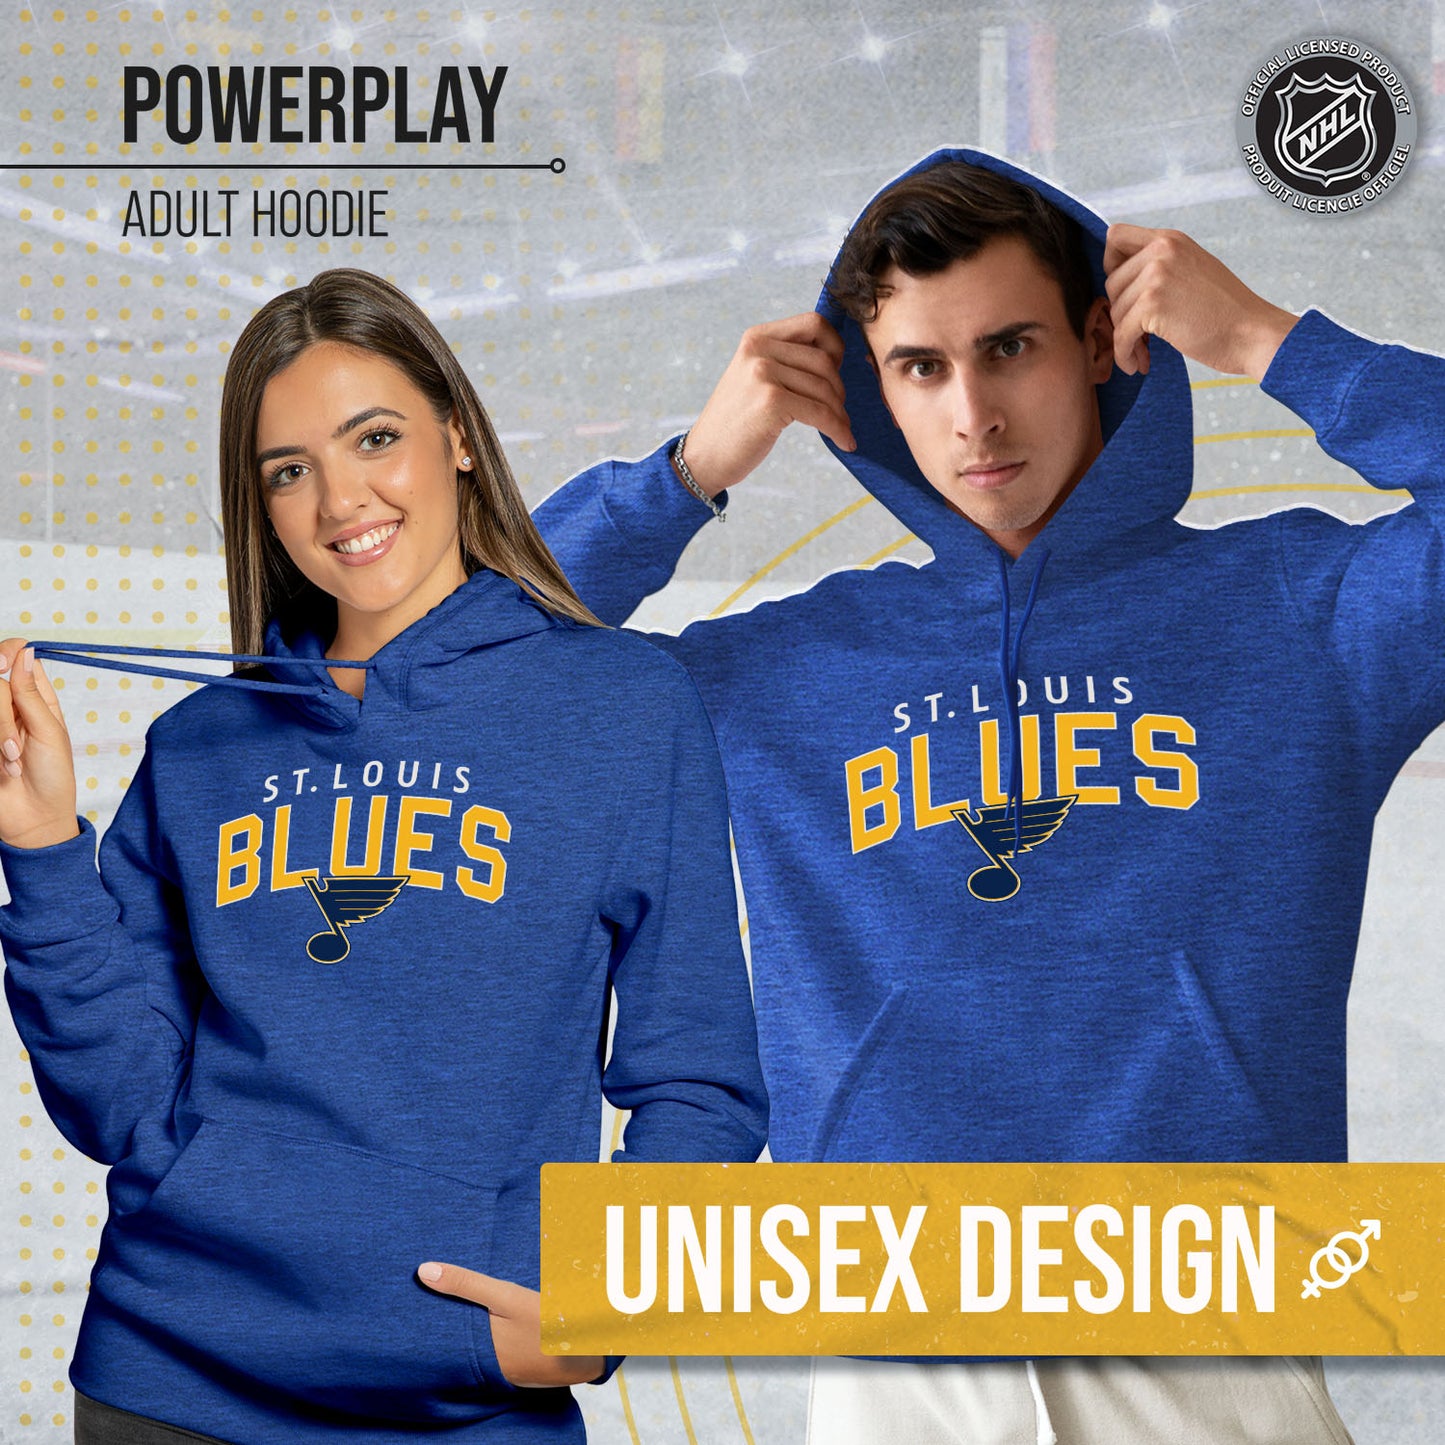 St. Louis Blues NHL Adult Unisex Powerplay Hooded Sweatshirt - Royal